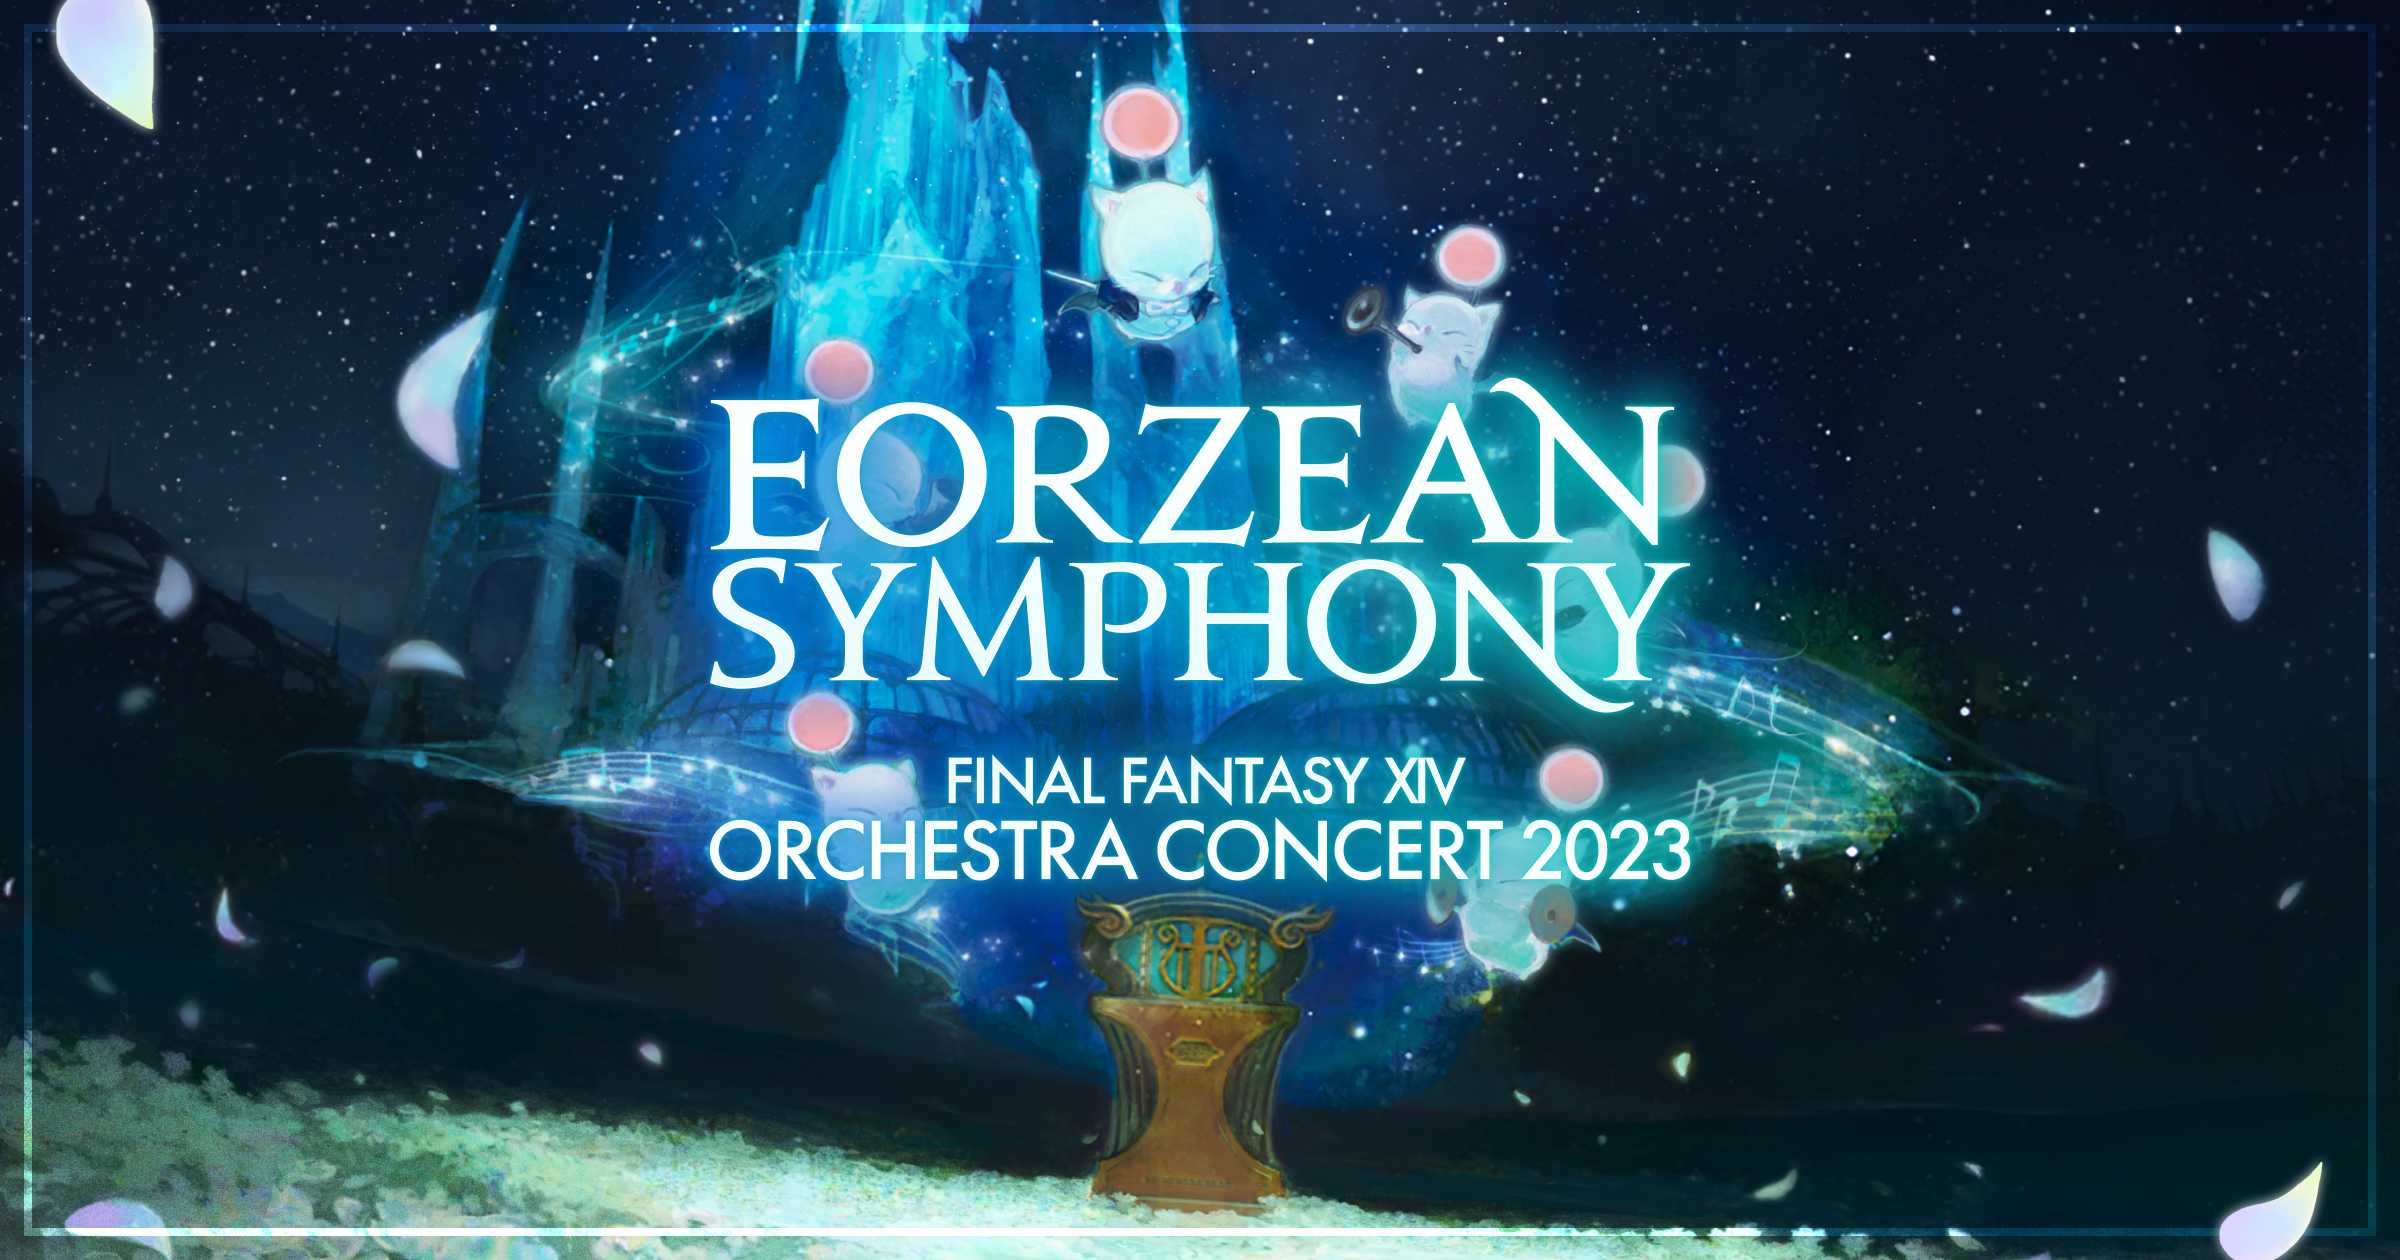 FINAL FANTASY XIV Orchestra Concert 2023 Eorzean Symphony